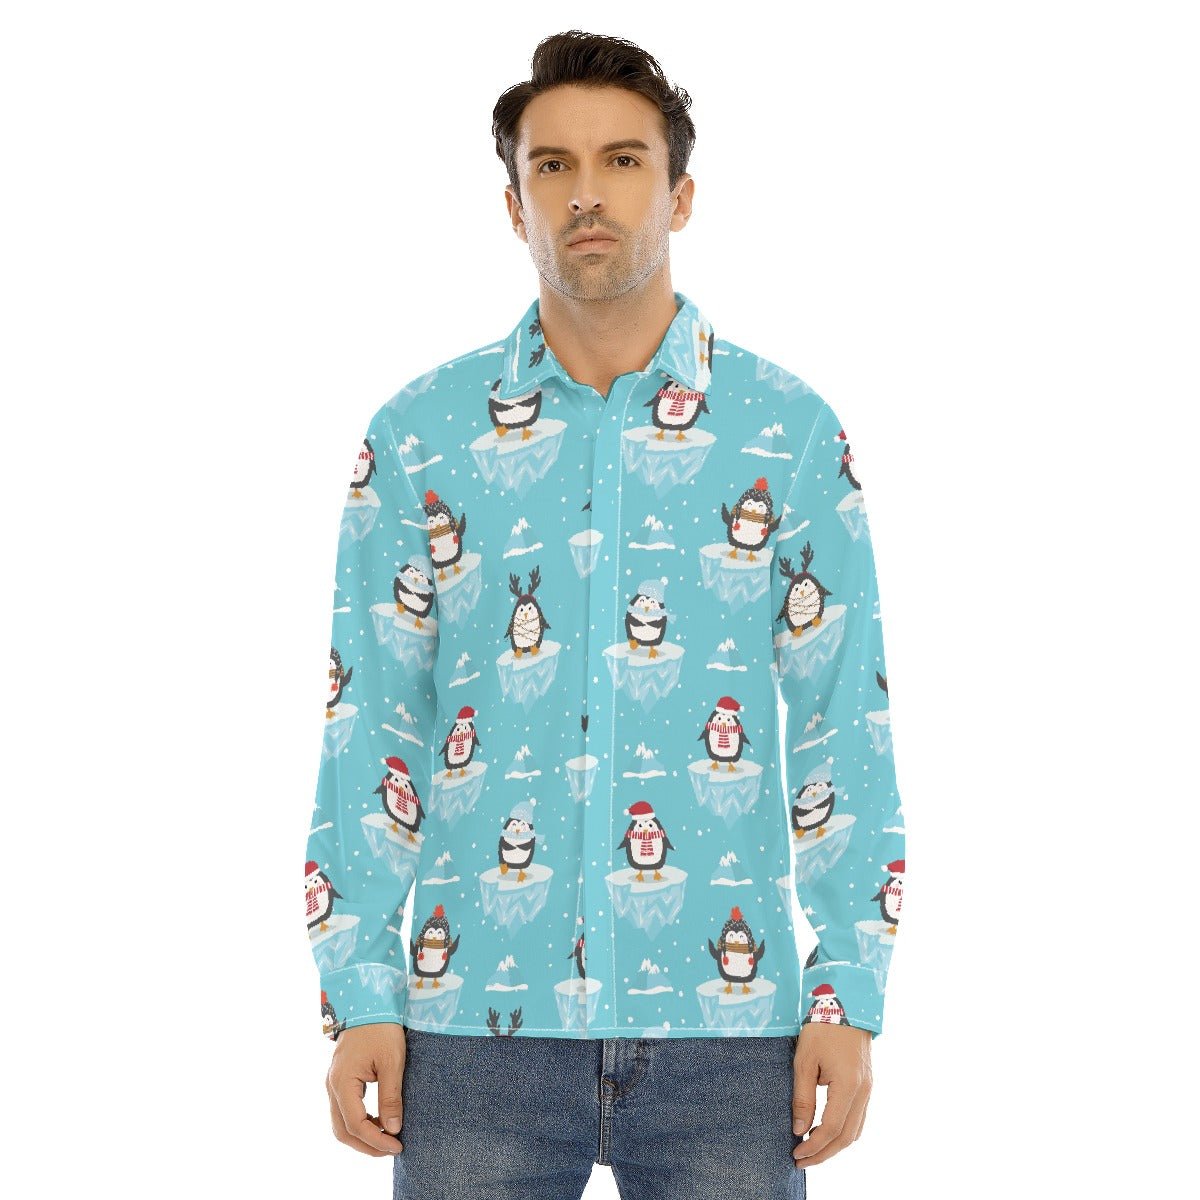 Men's Collar Christmas Shirt - Icy Penguins - Festive Style